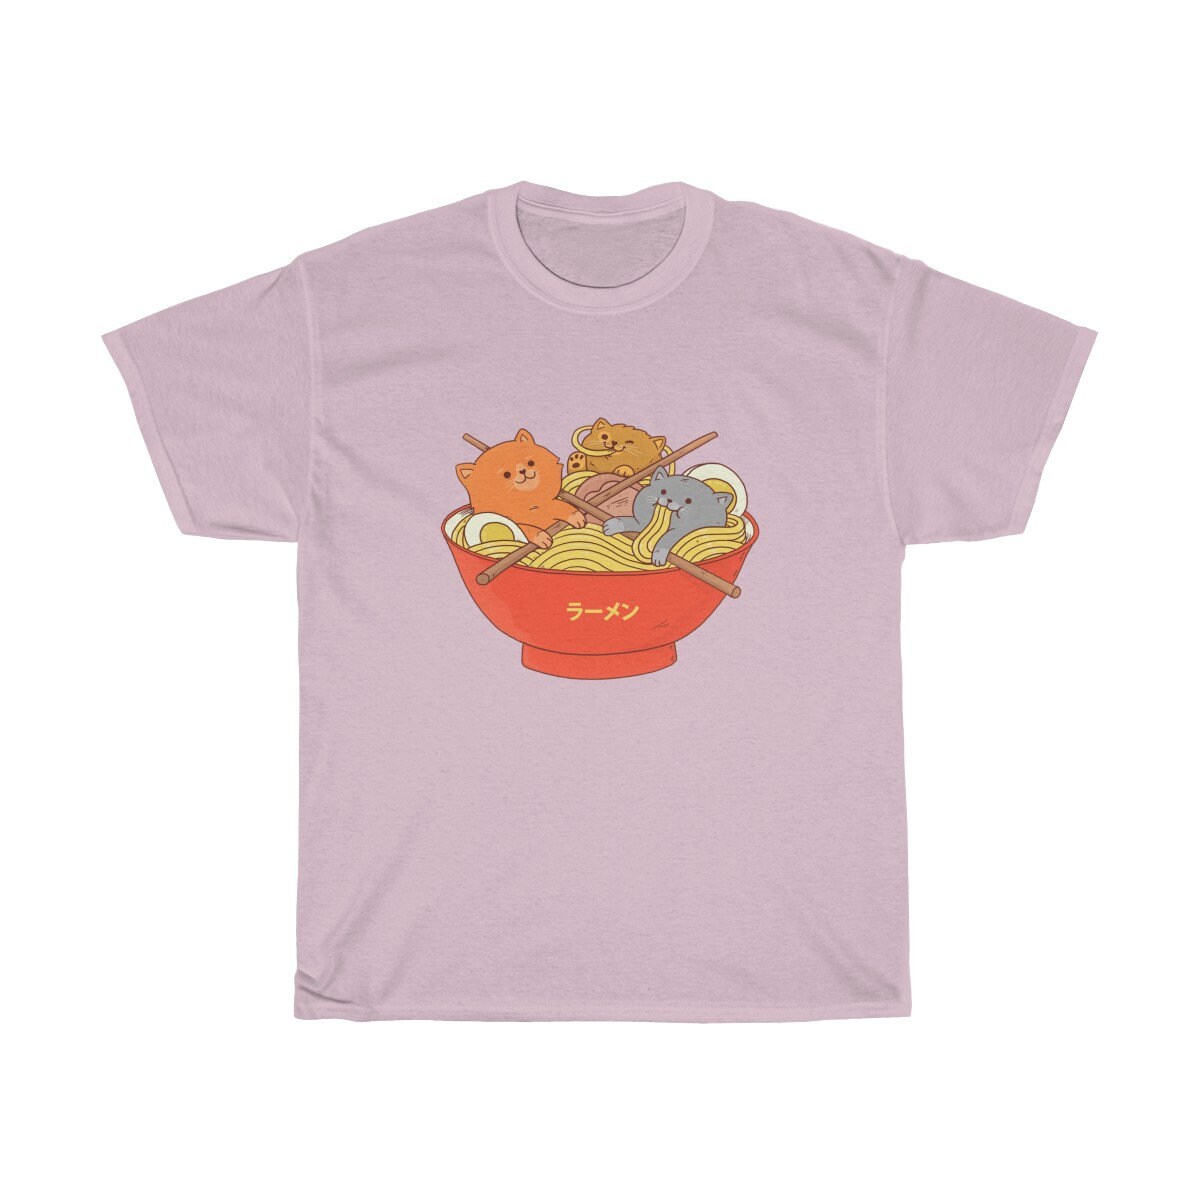 Kawaii Noodle Cats Shirt kawaii shirtaesthetic shirtkawaii | Etsy